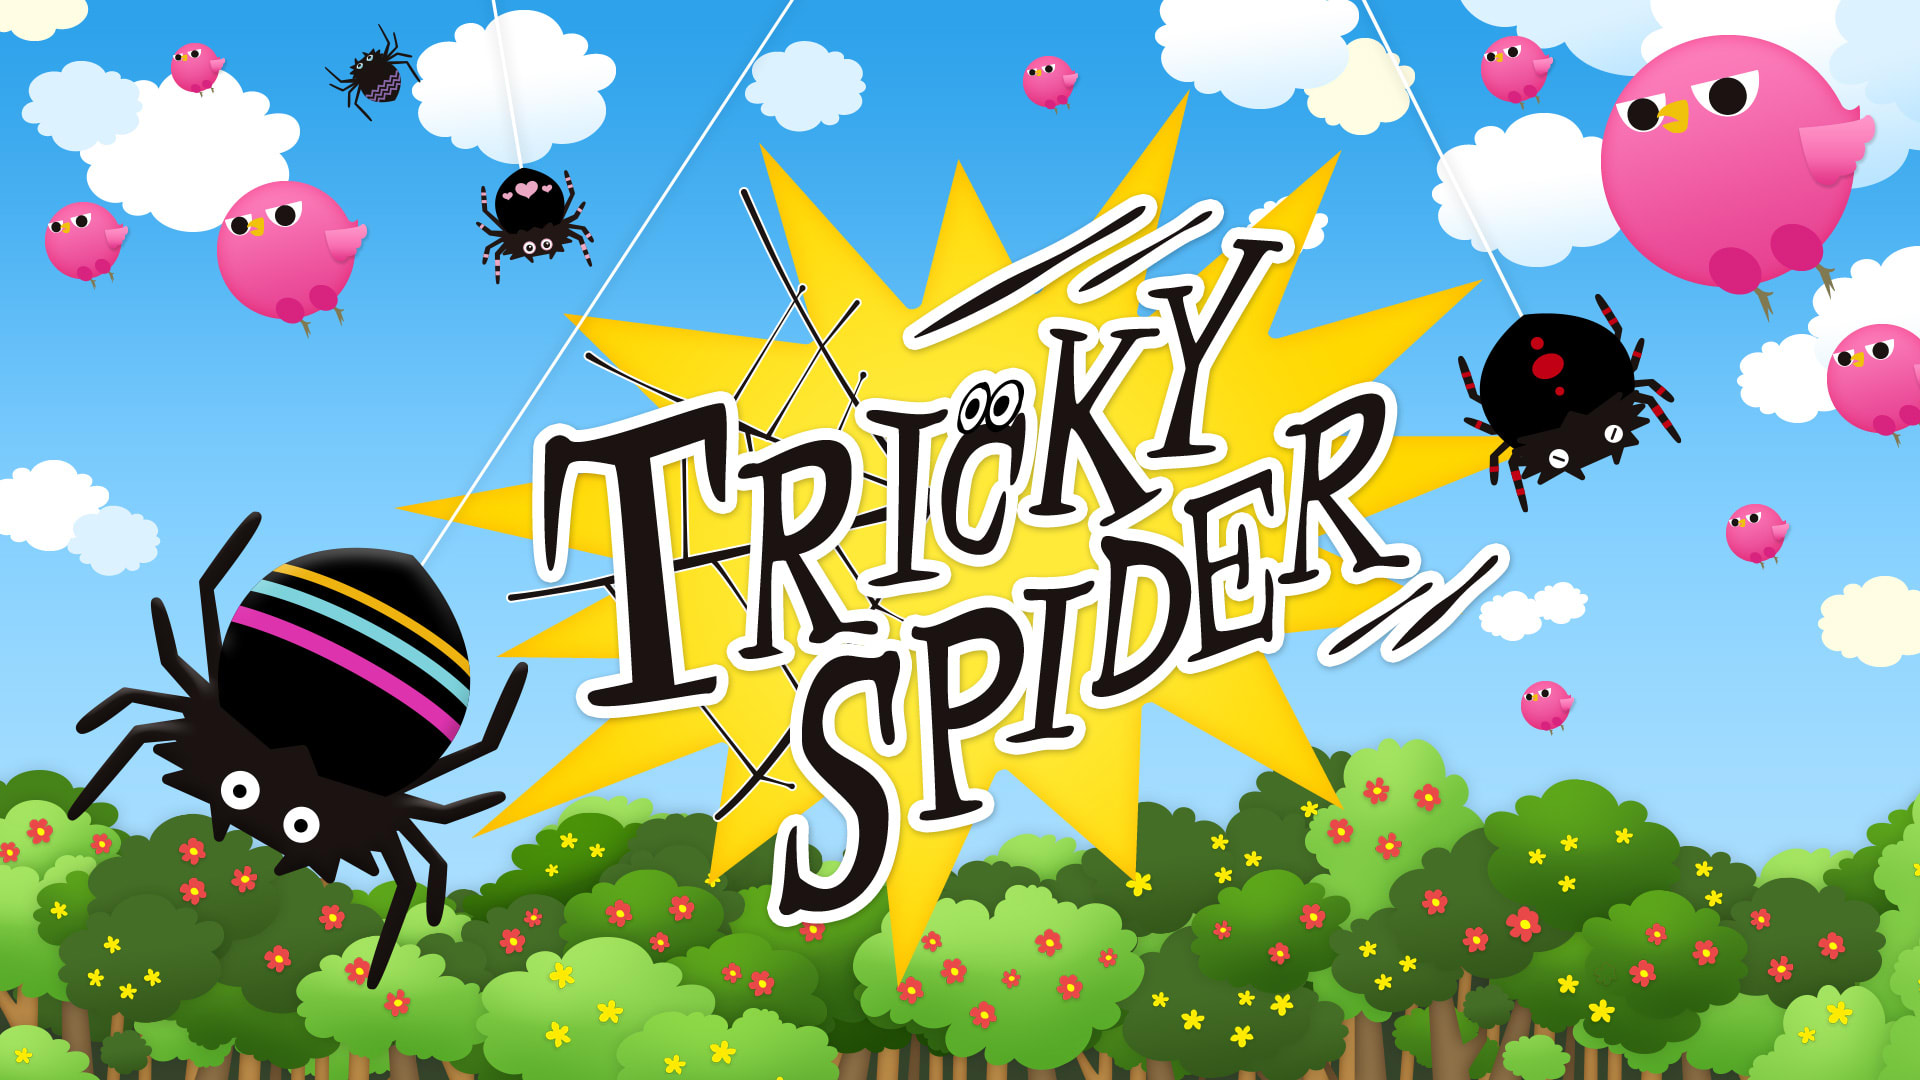 Tricky Spider